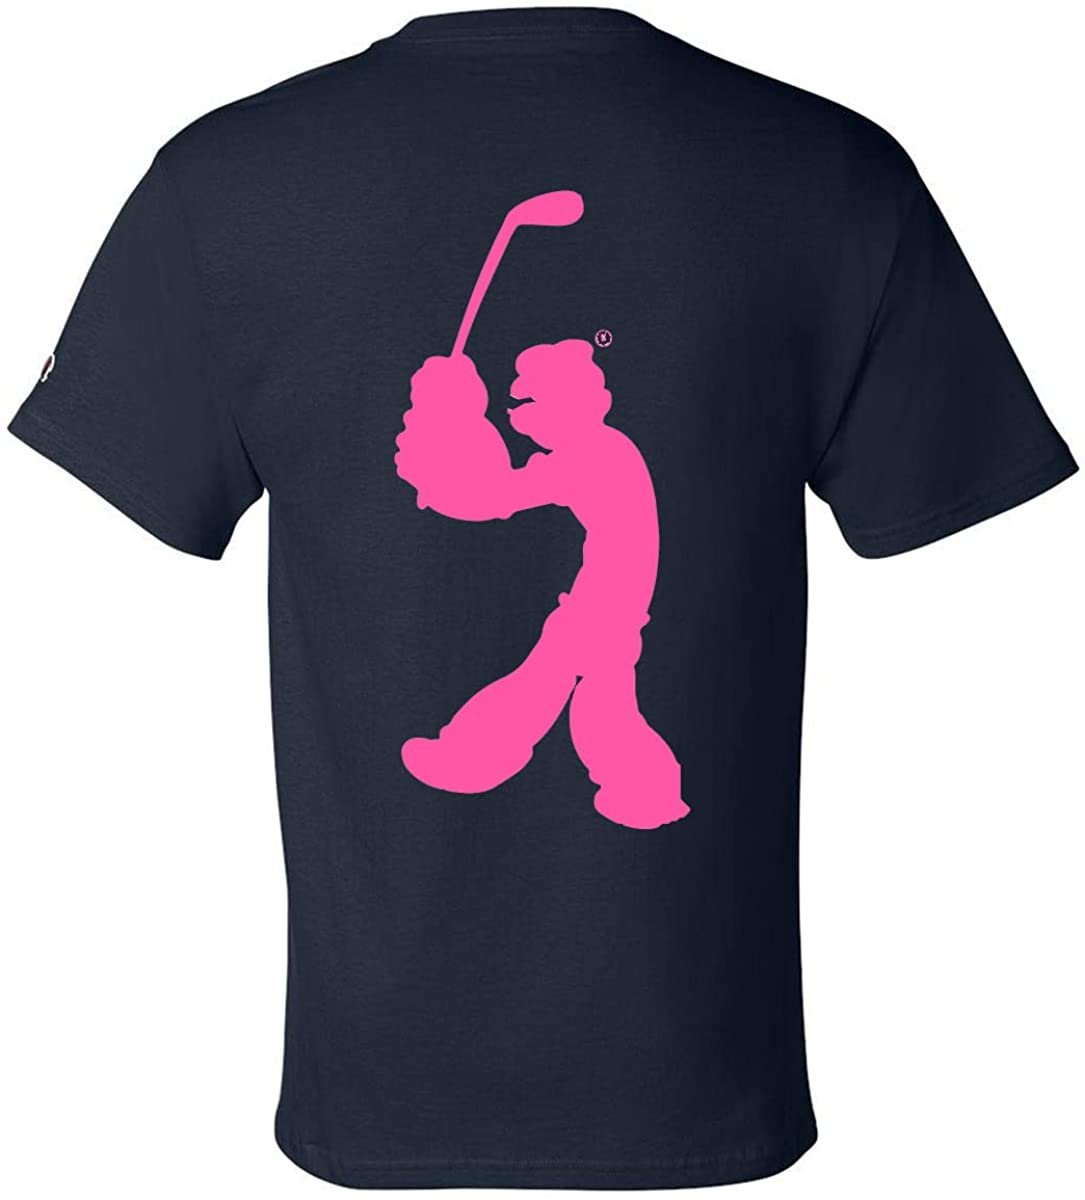 Popeye Golf Men's Silhouette Print T-Shirt